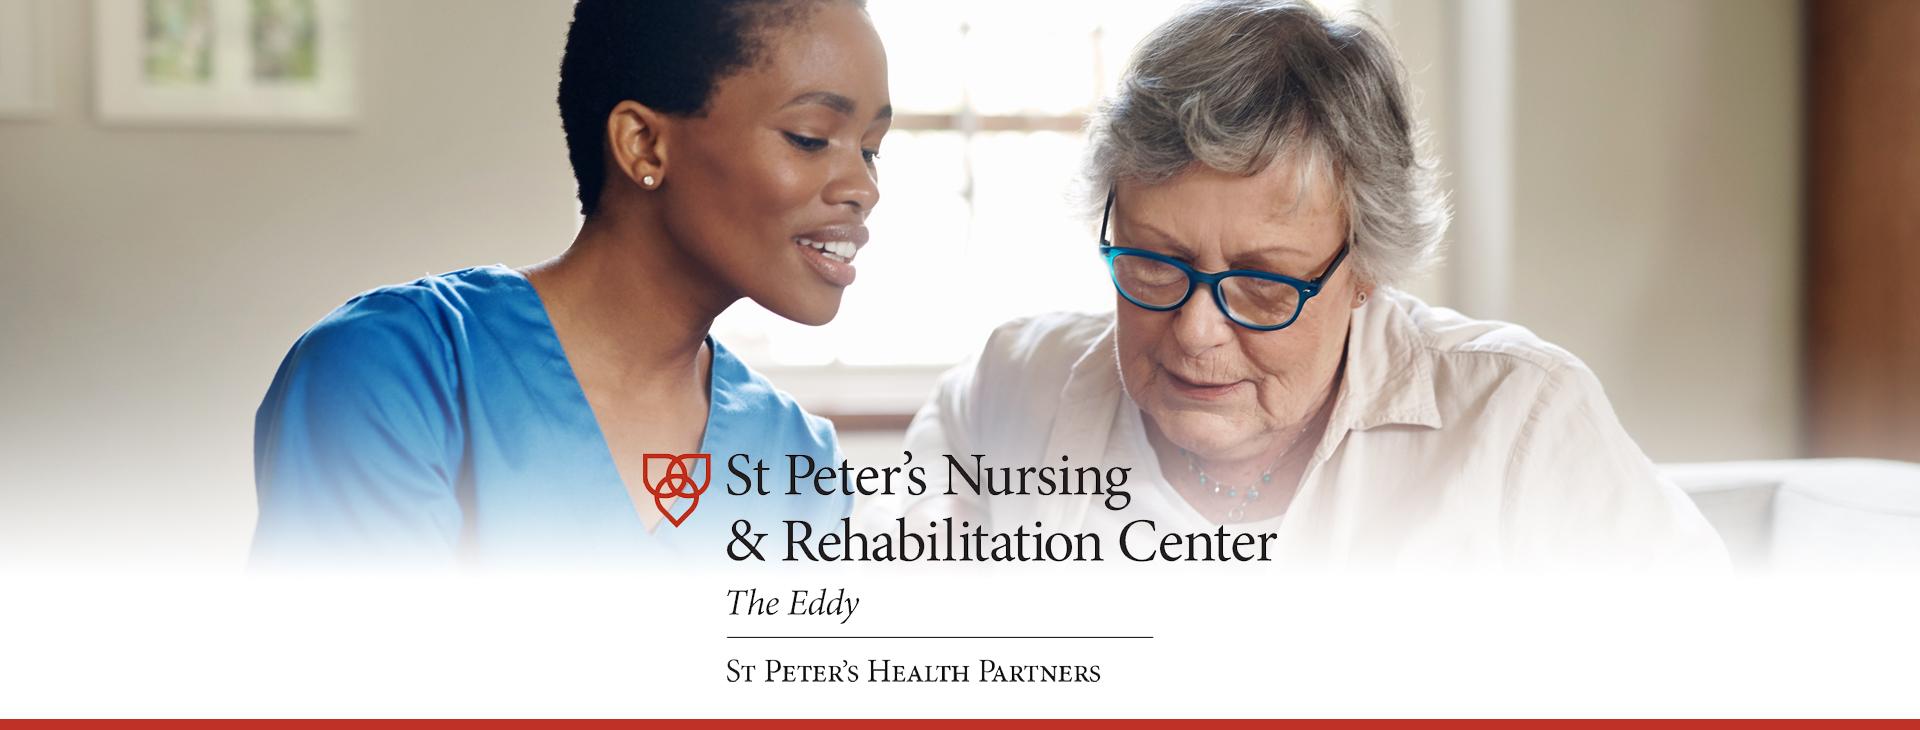 St. Peters Nursing and Rehabilitation Careers